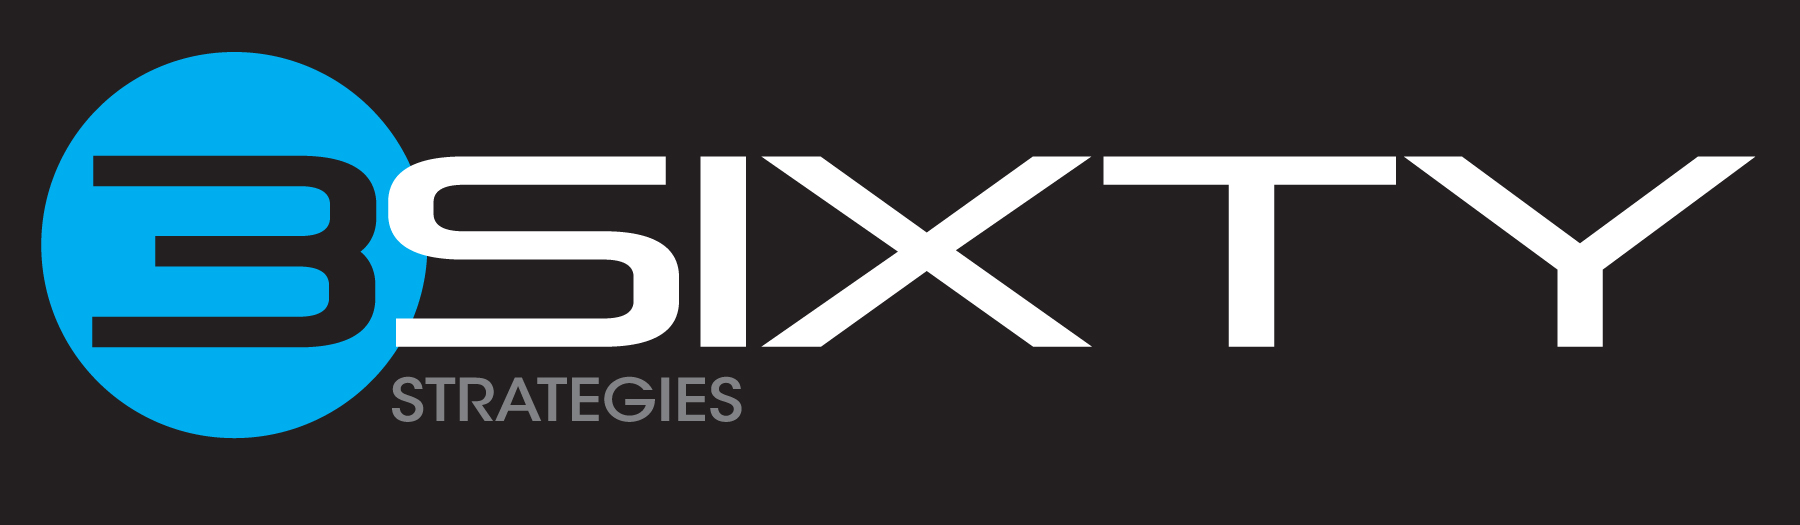 3Sixty Strategies - On-Line, Digital and HD Video Marketing Agency, Focused on California Luxury Real Estate Markets of Los Angeles, Orange County, Santa Barbara, San Diego and Riverside County